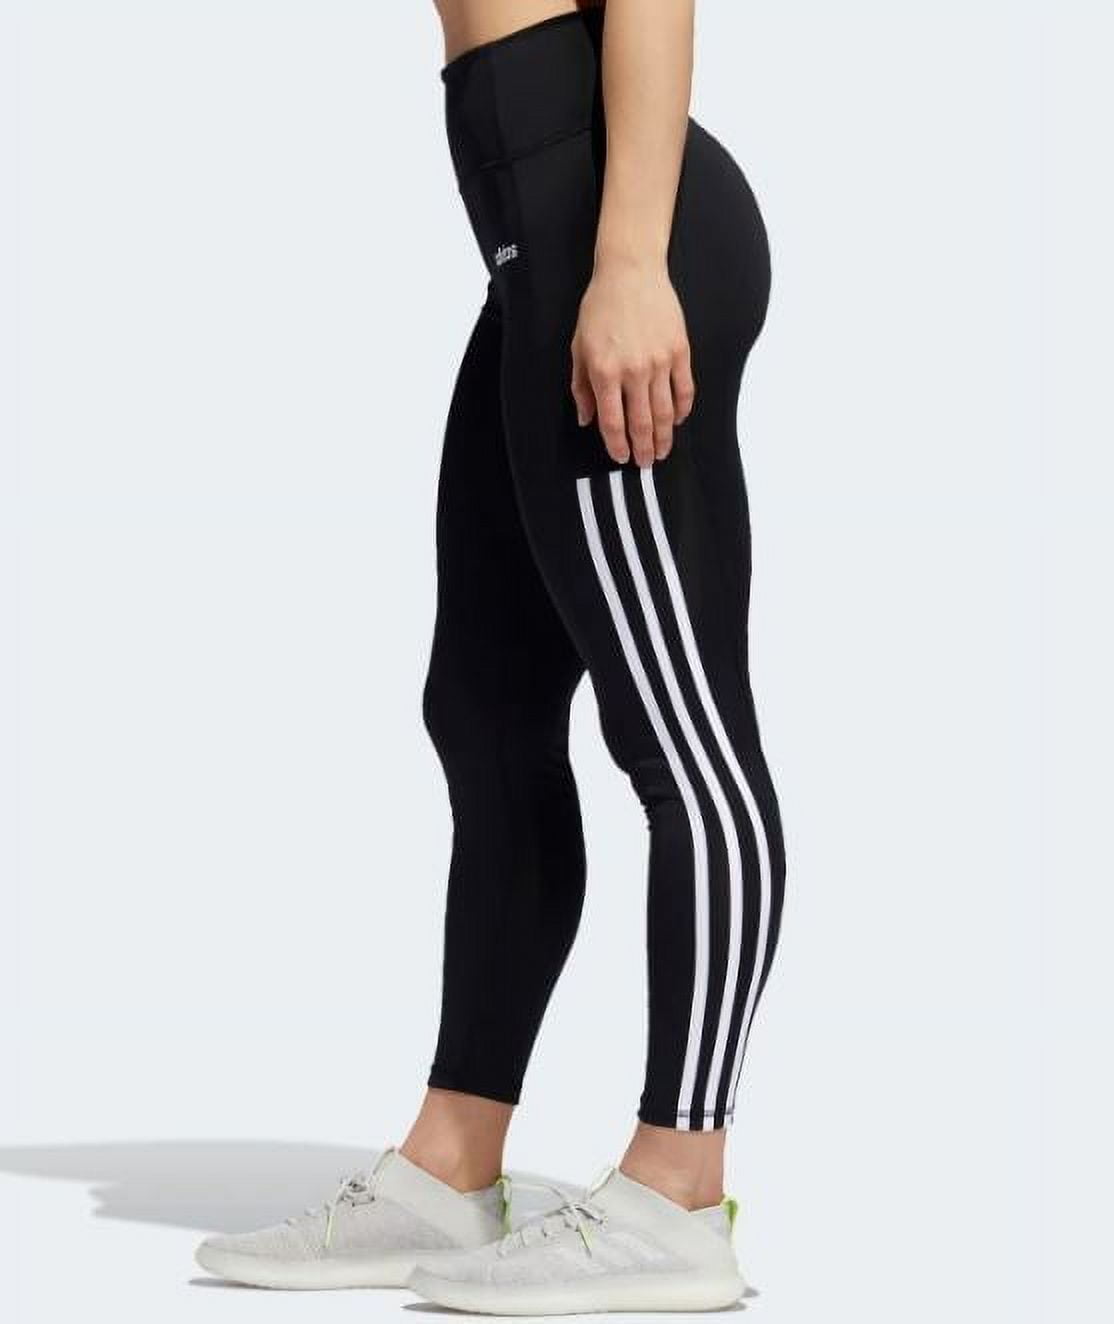 Adidas Women's 7/8 3 Stripe High Waist Active Tight Leggings, Black/White  Small